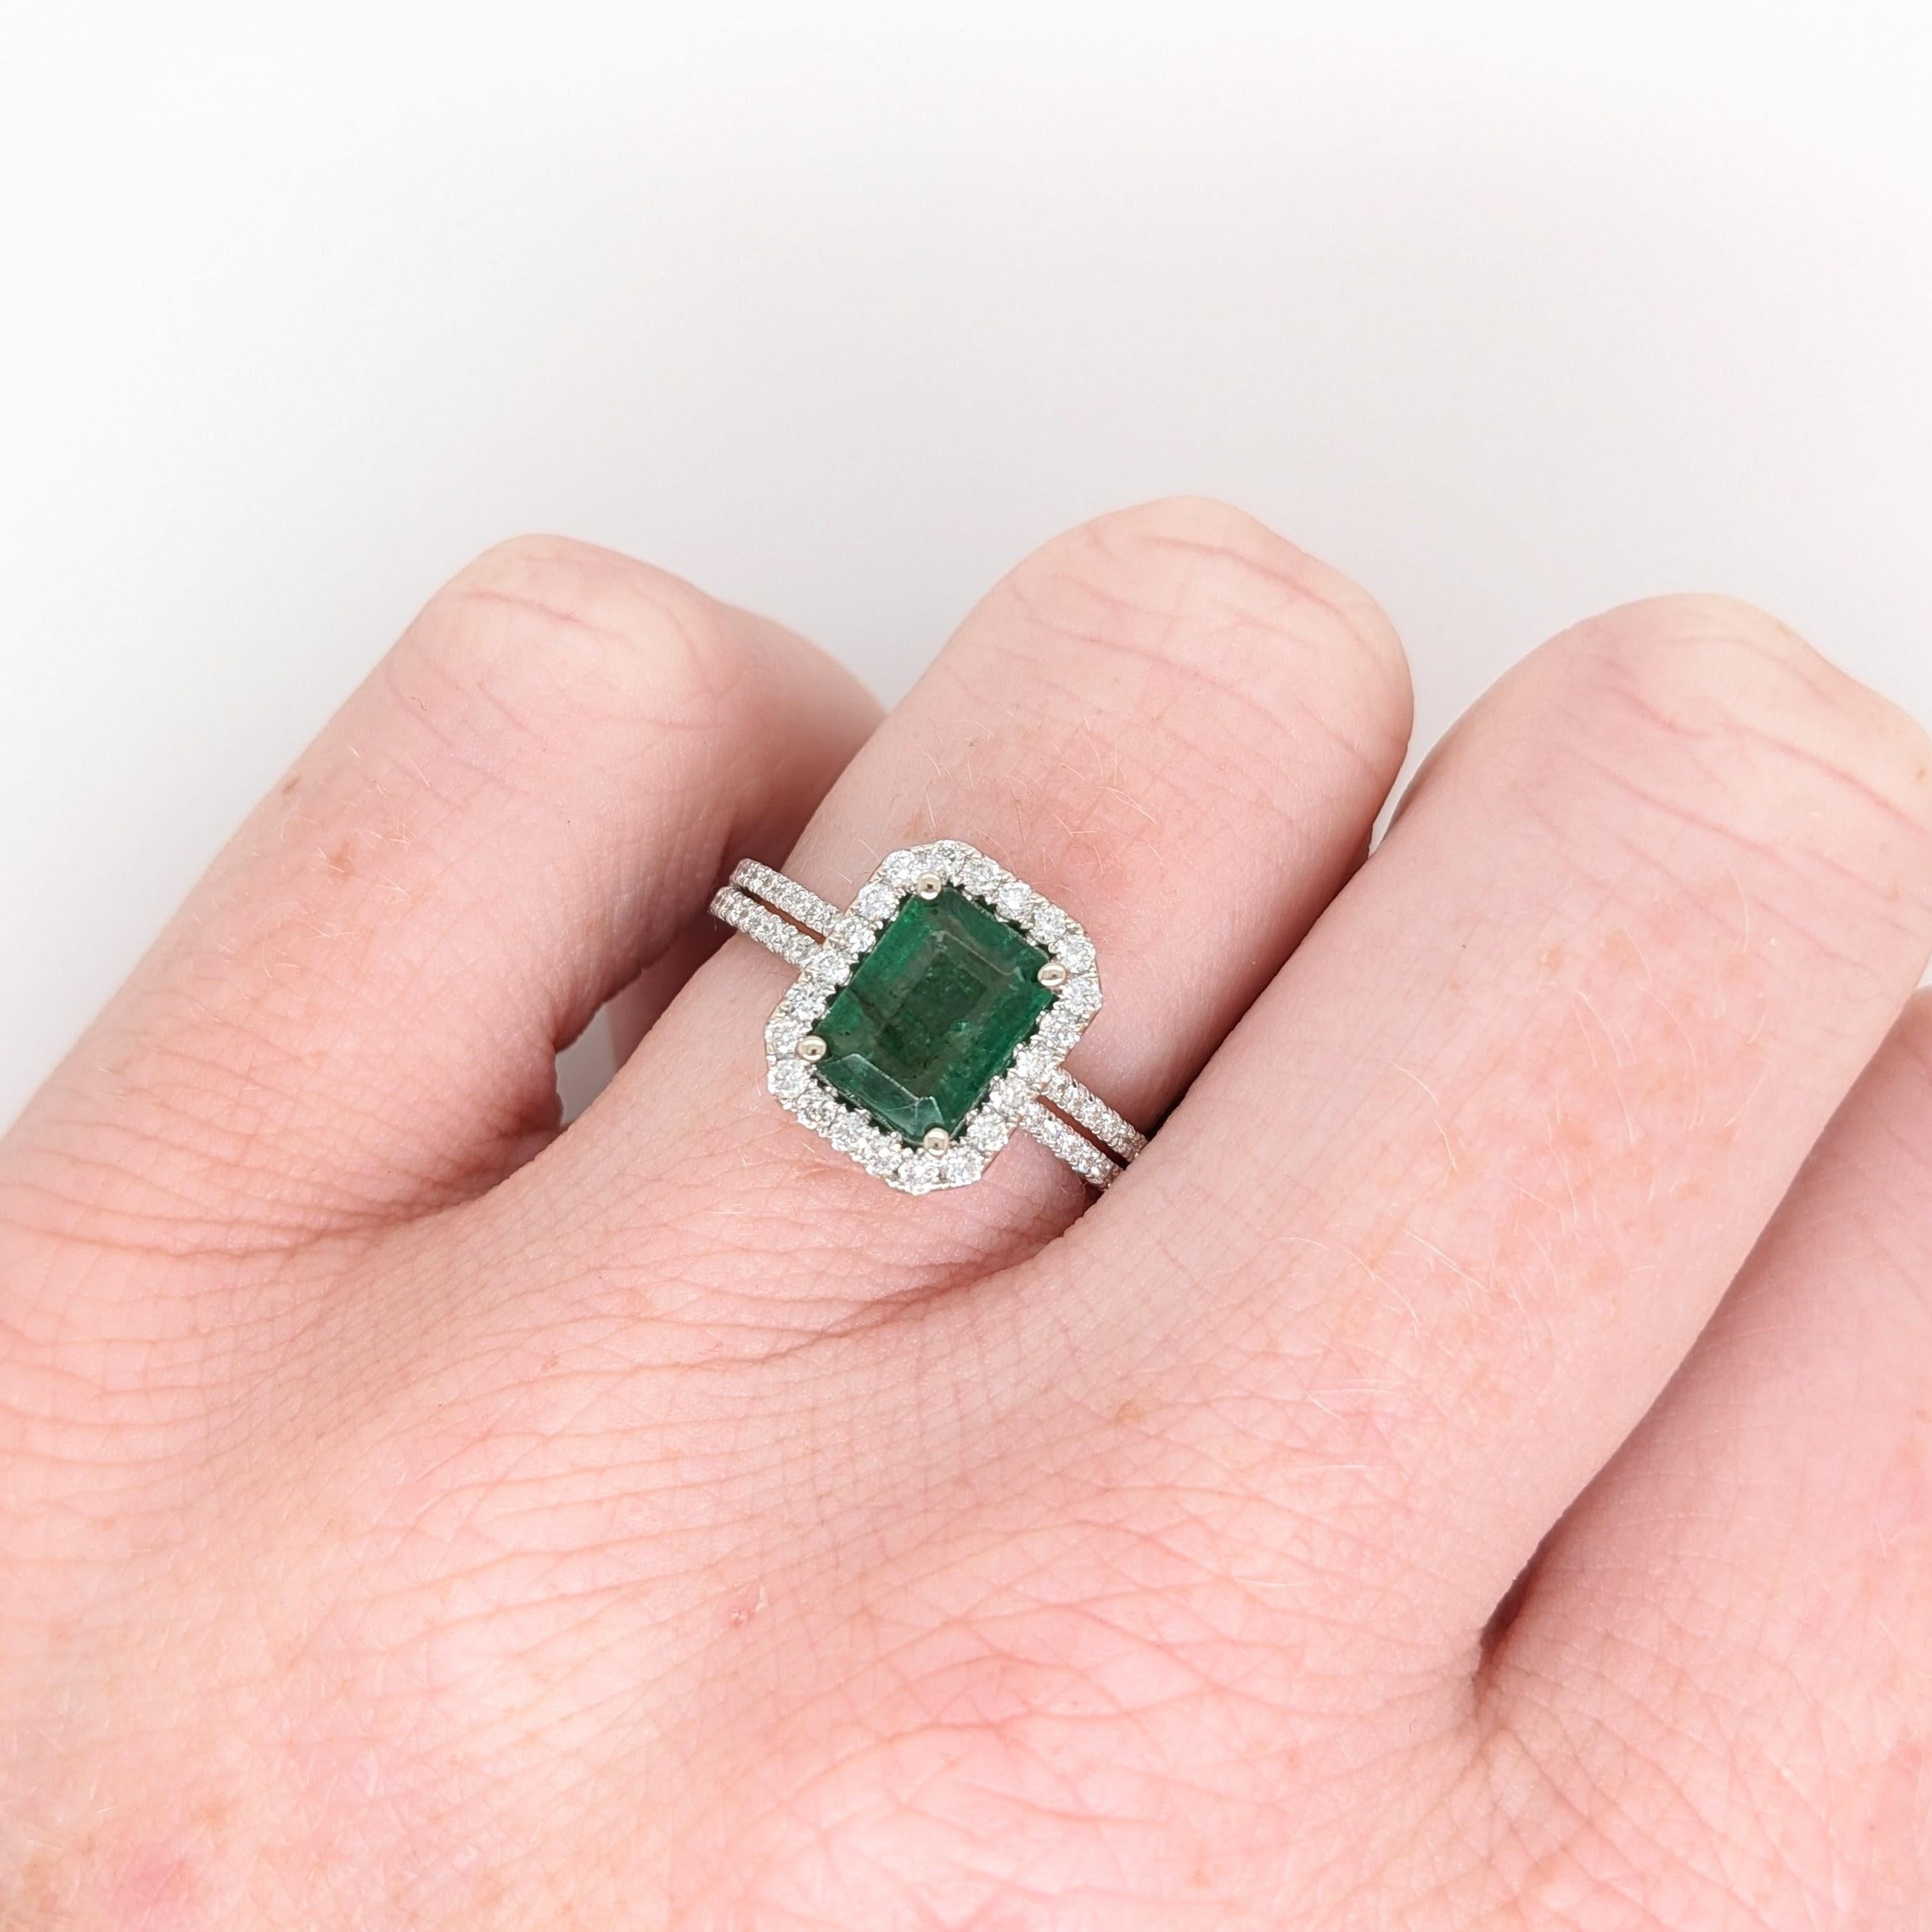 1.27ct Emerald Ring w Natural Diamond Halo in 14K White Gold Emerald Cut 8x6mm 2